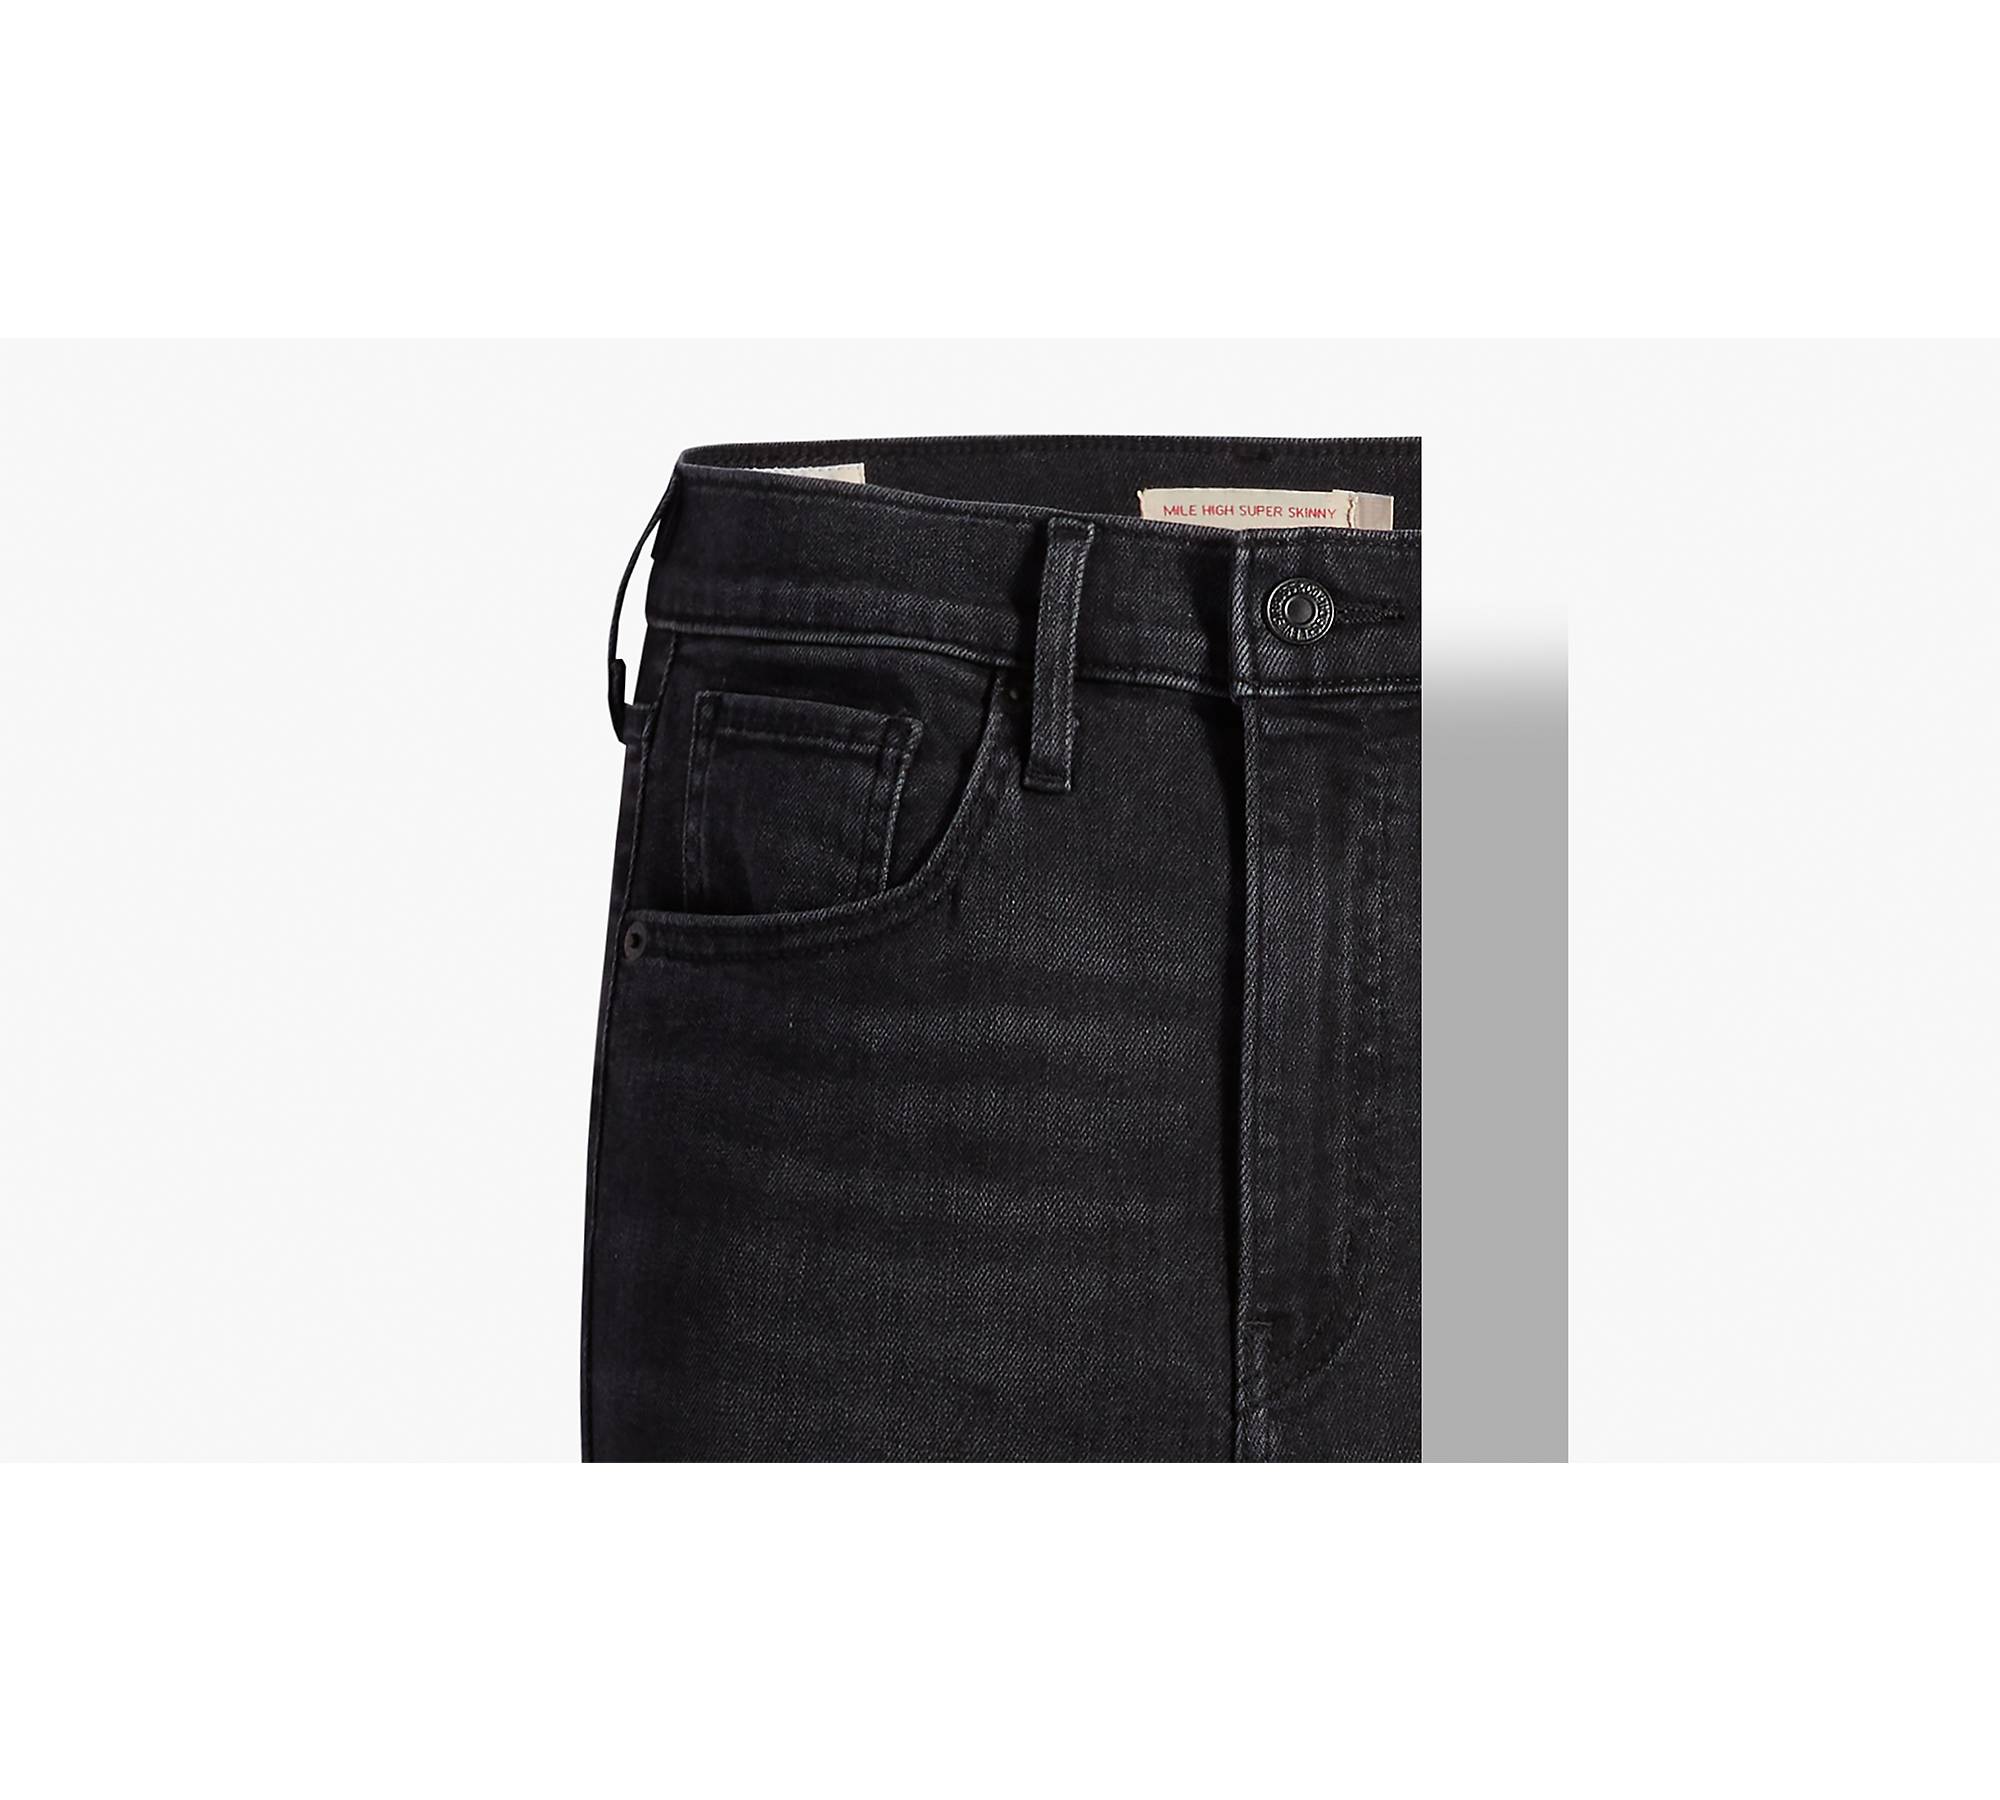 Mile High Super Skinny Jeans - Black | Levi's® NL